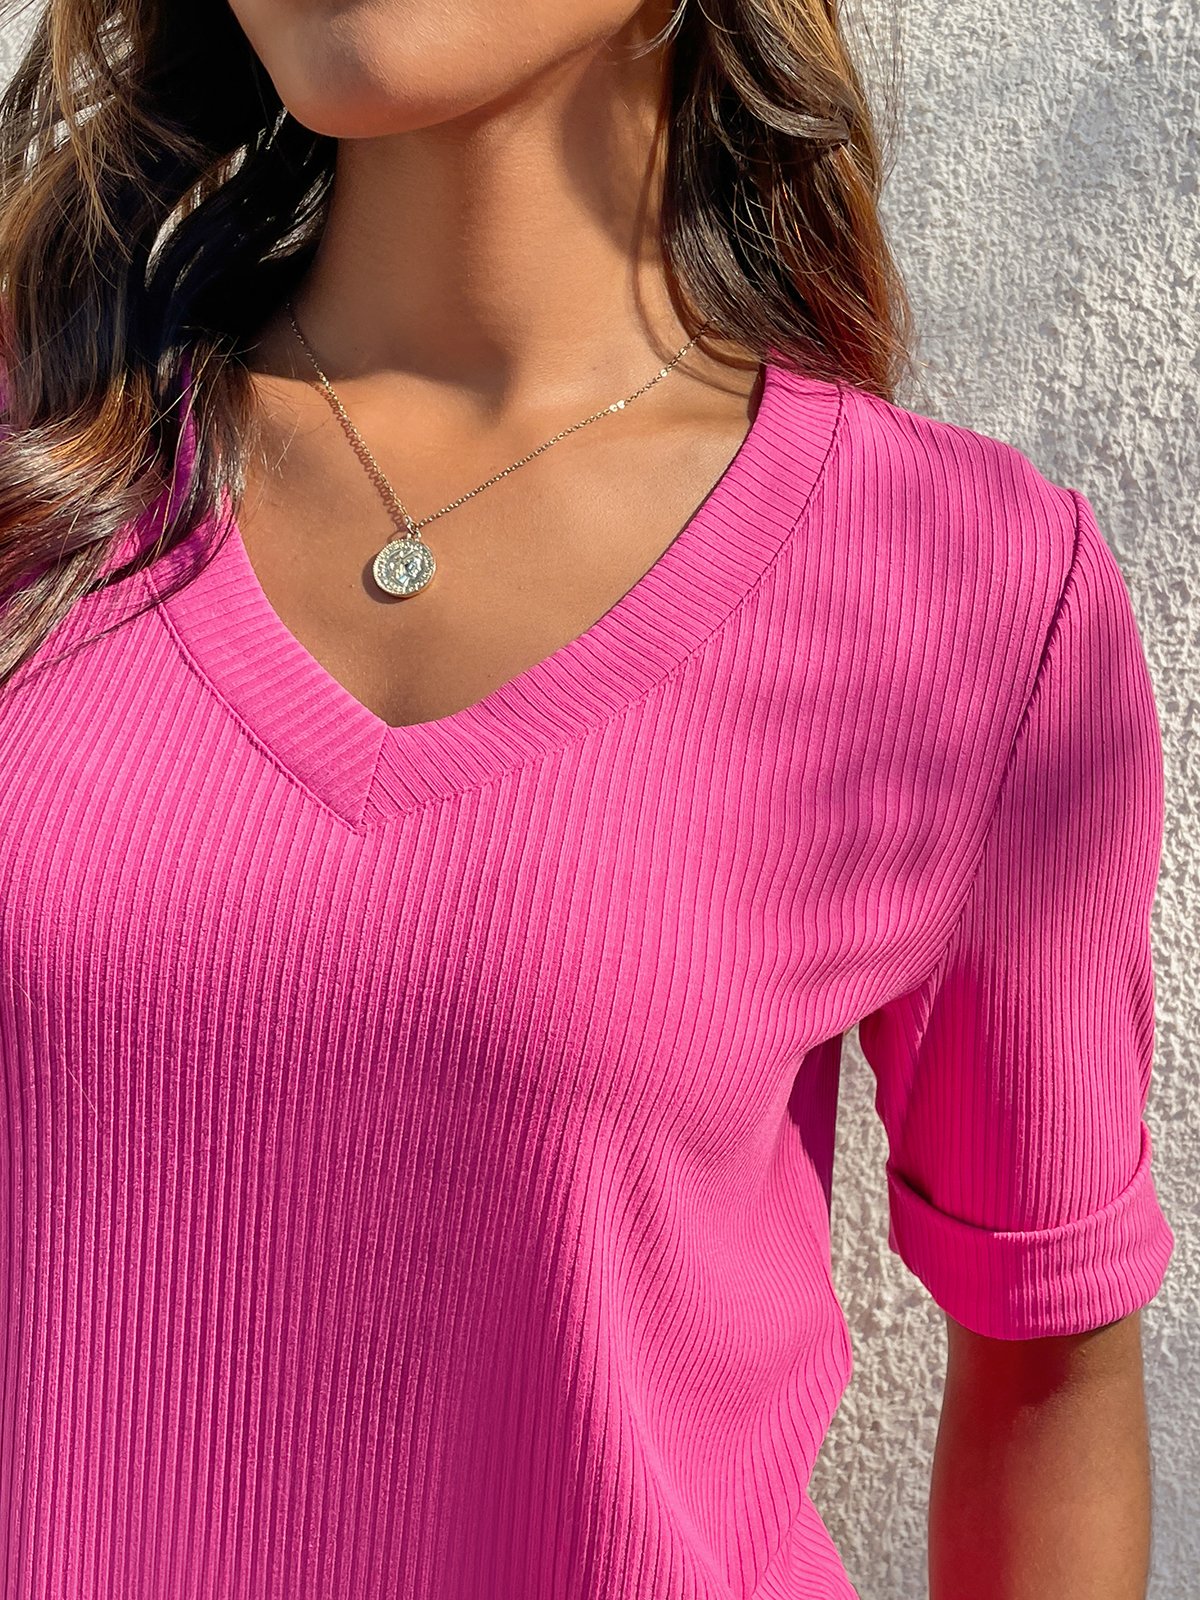 Women's Casual Pink Plain V Neck Half Sleeve Soft Comfy T-shirt